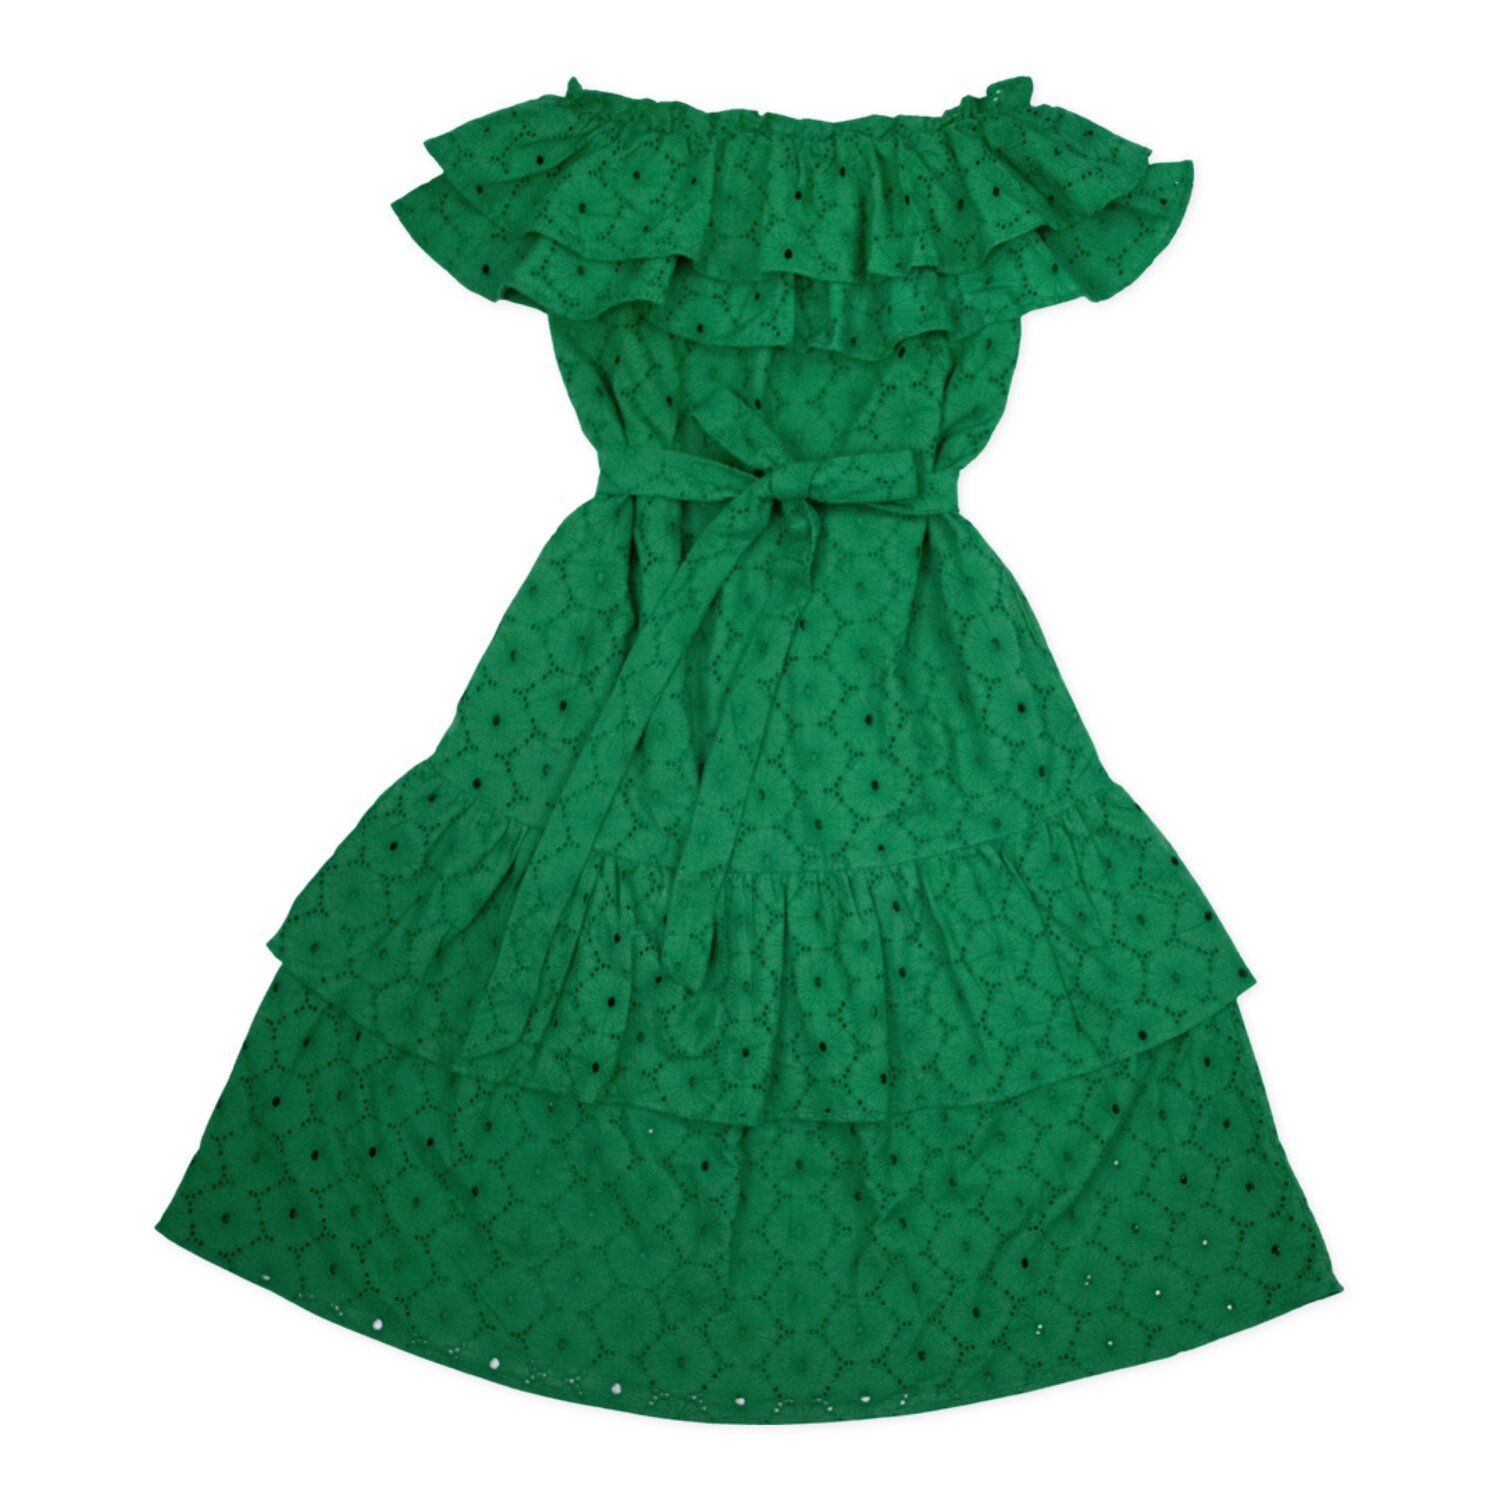 Francis Dress in Kelly Green Eyelet — Elizabeth Wilson | Elizabeth Wilson Designs